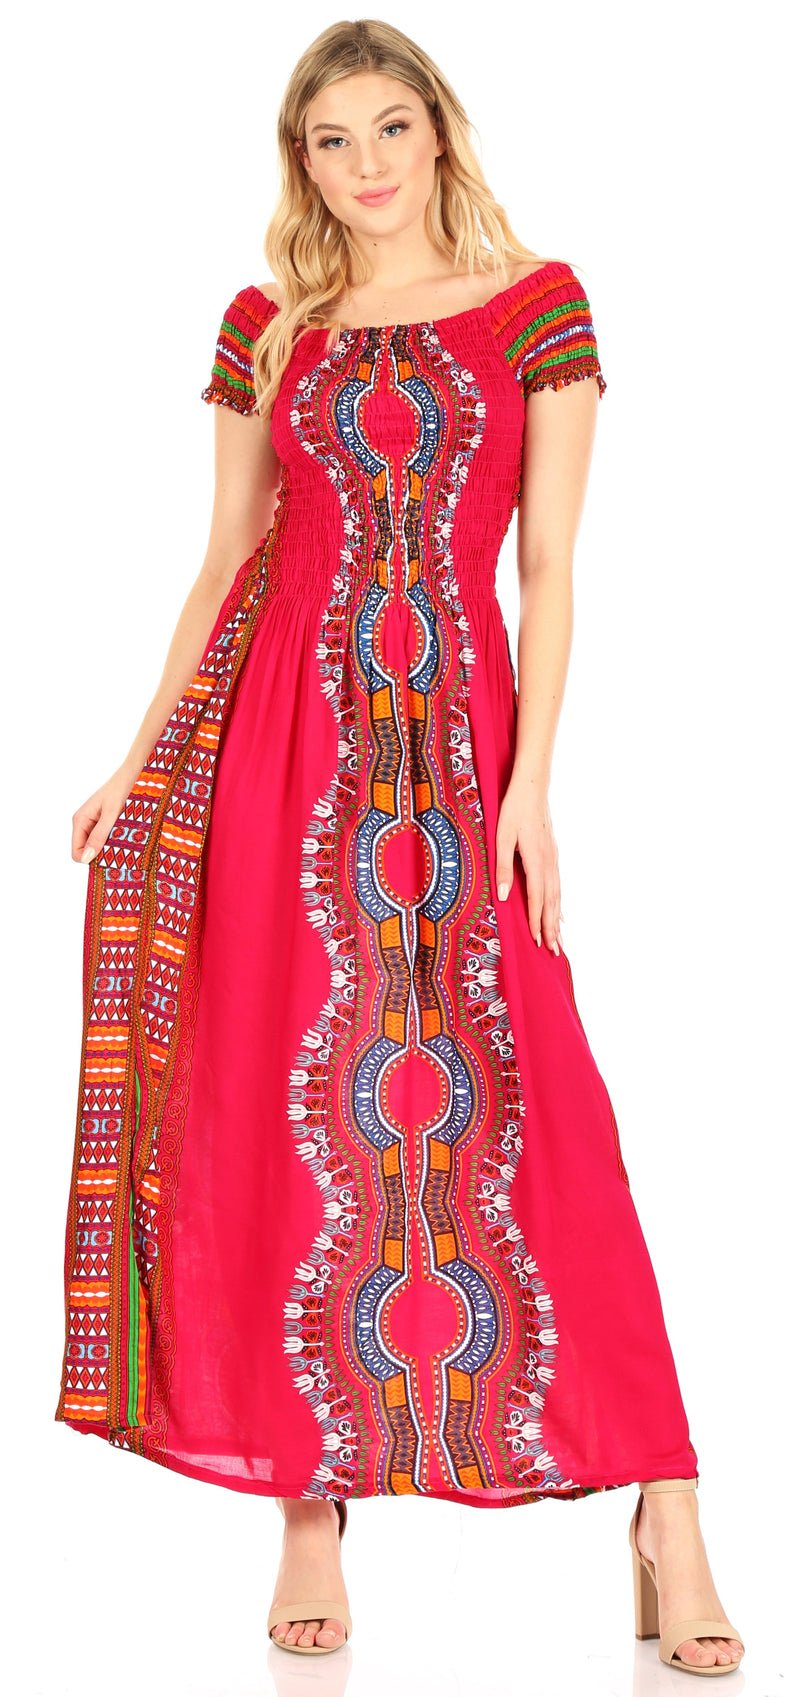 Sakkas Siona Women's Long Maxi Casual Off Shoulder Dashiki African Dress Elastic